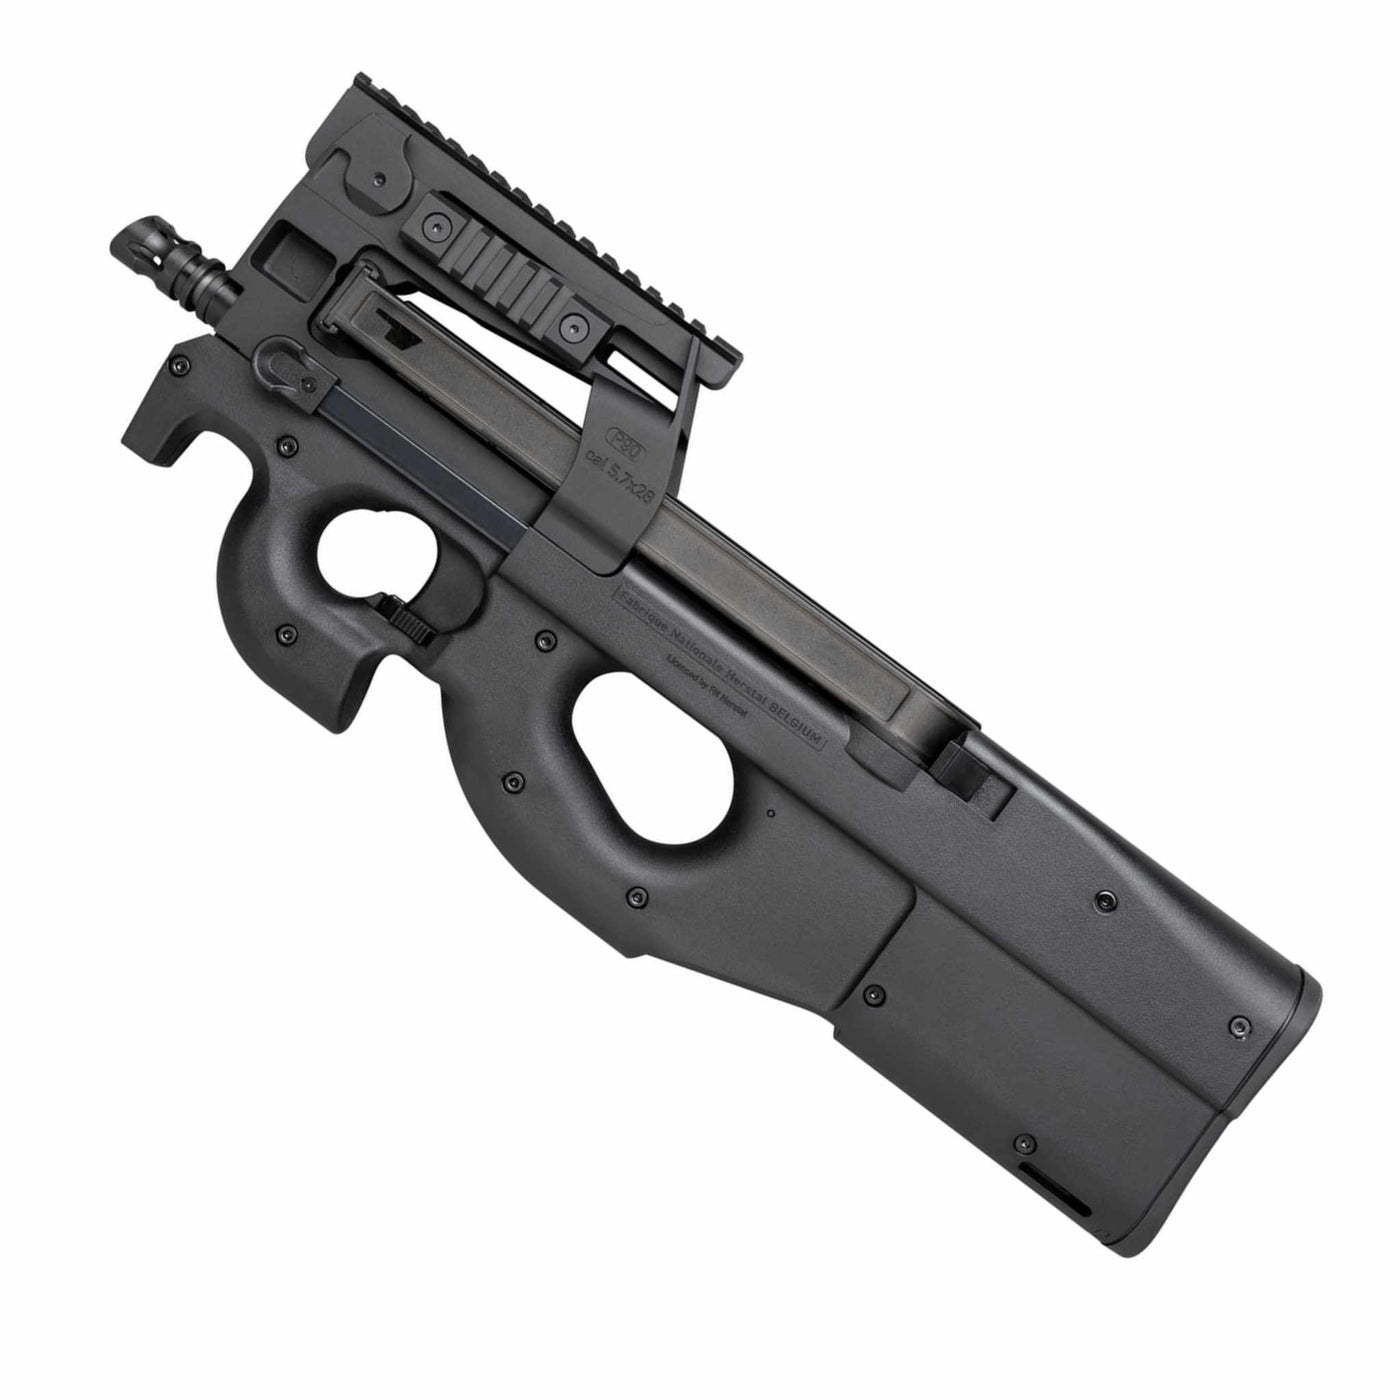 Krytac EMG Cybergun FN P90 SMG